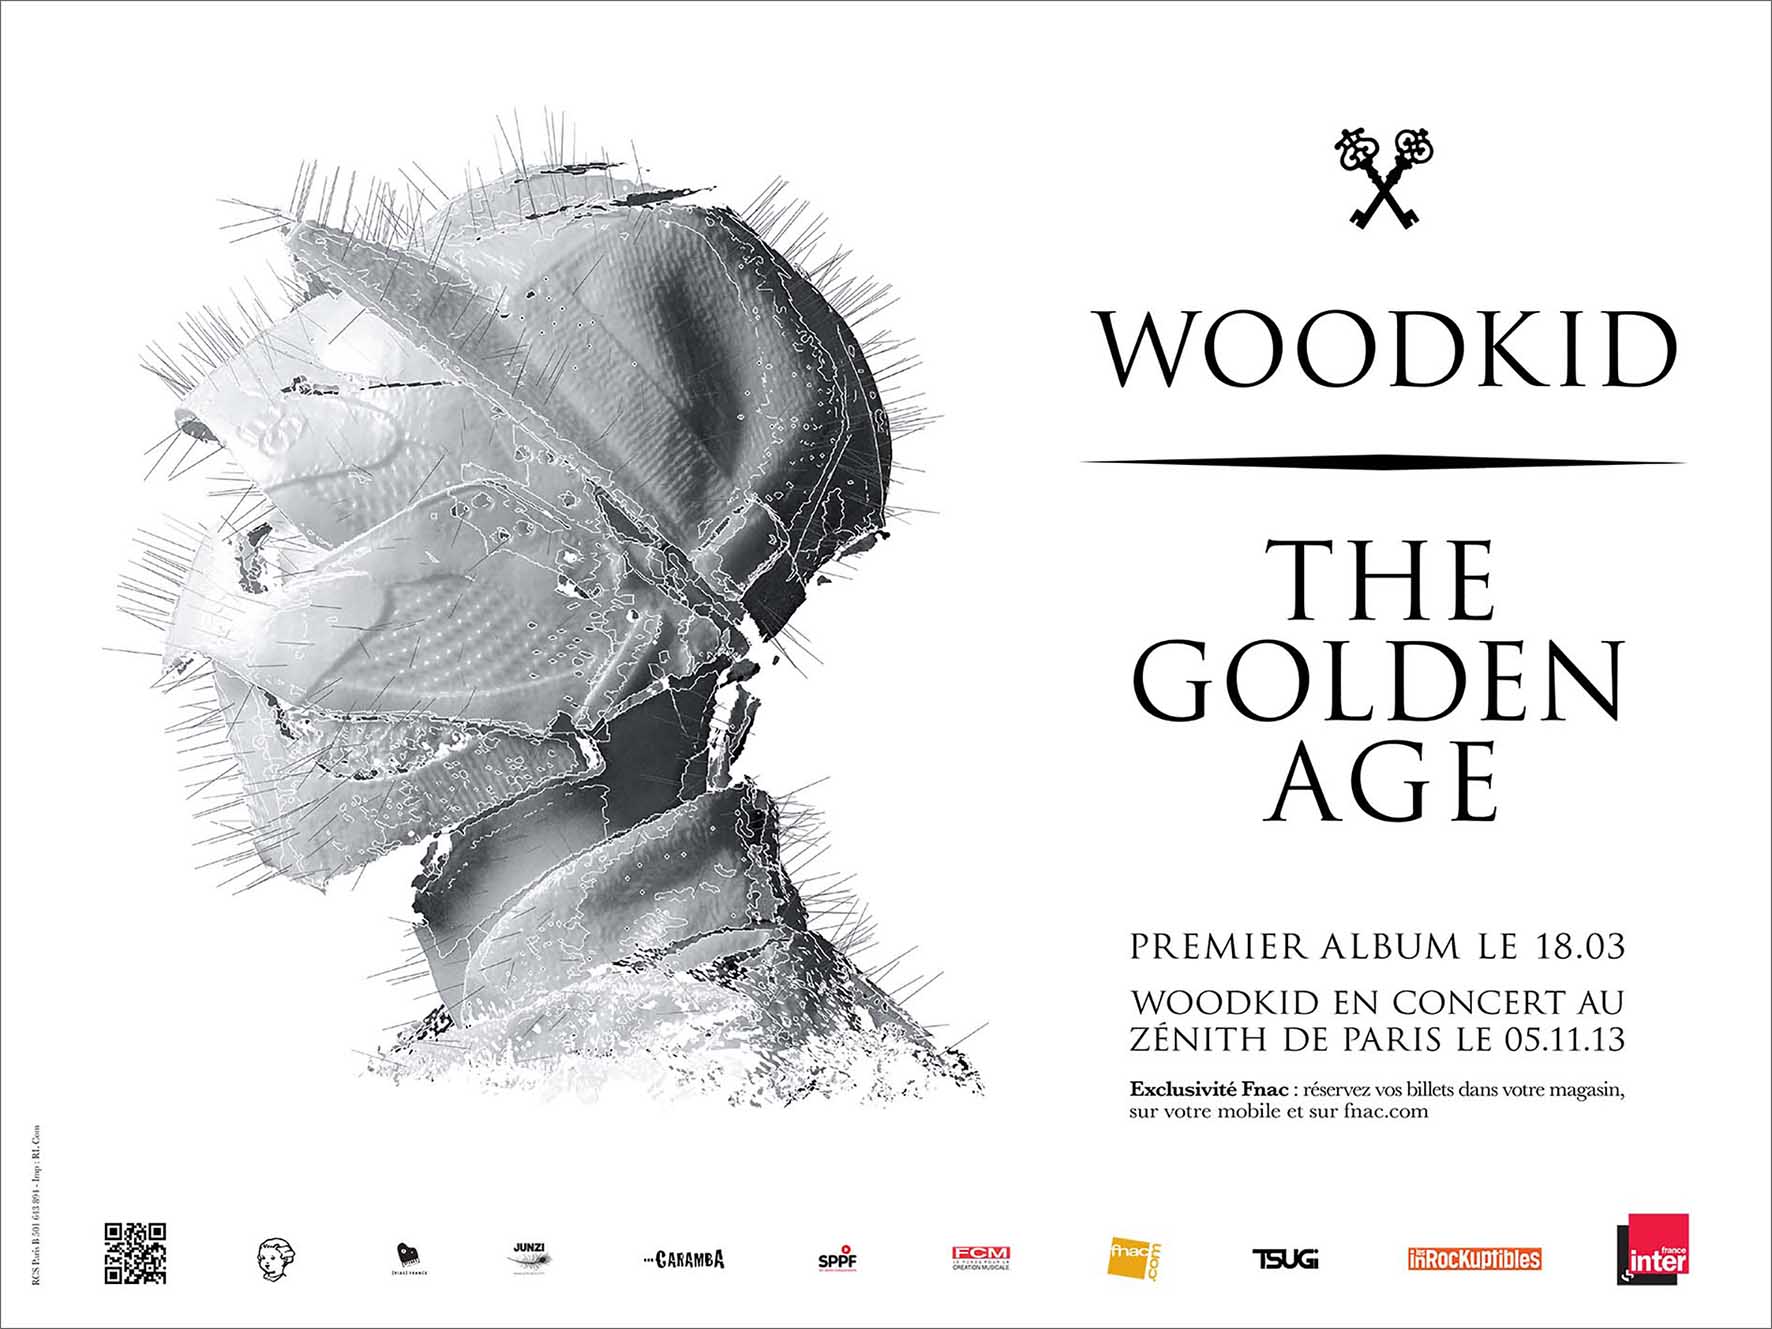 Woodkid the golden age album affiche metro 2013